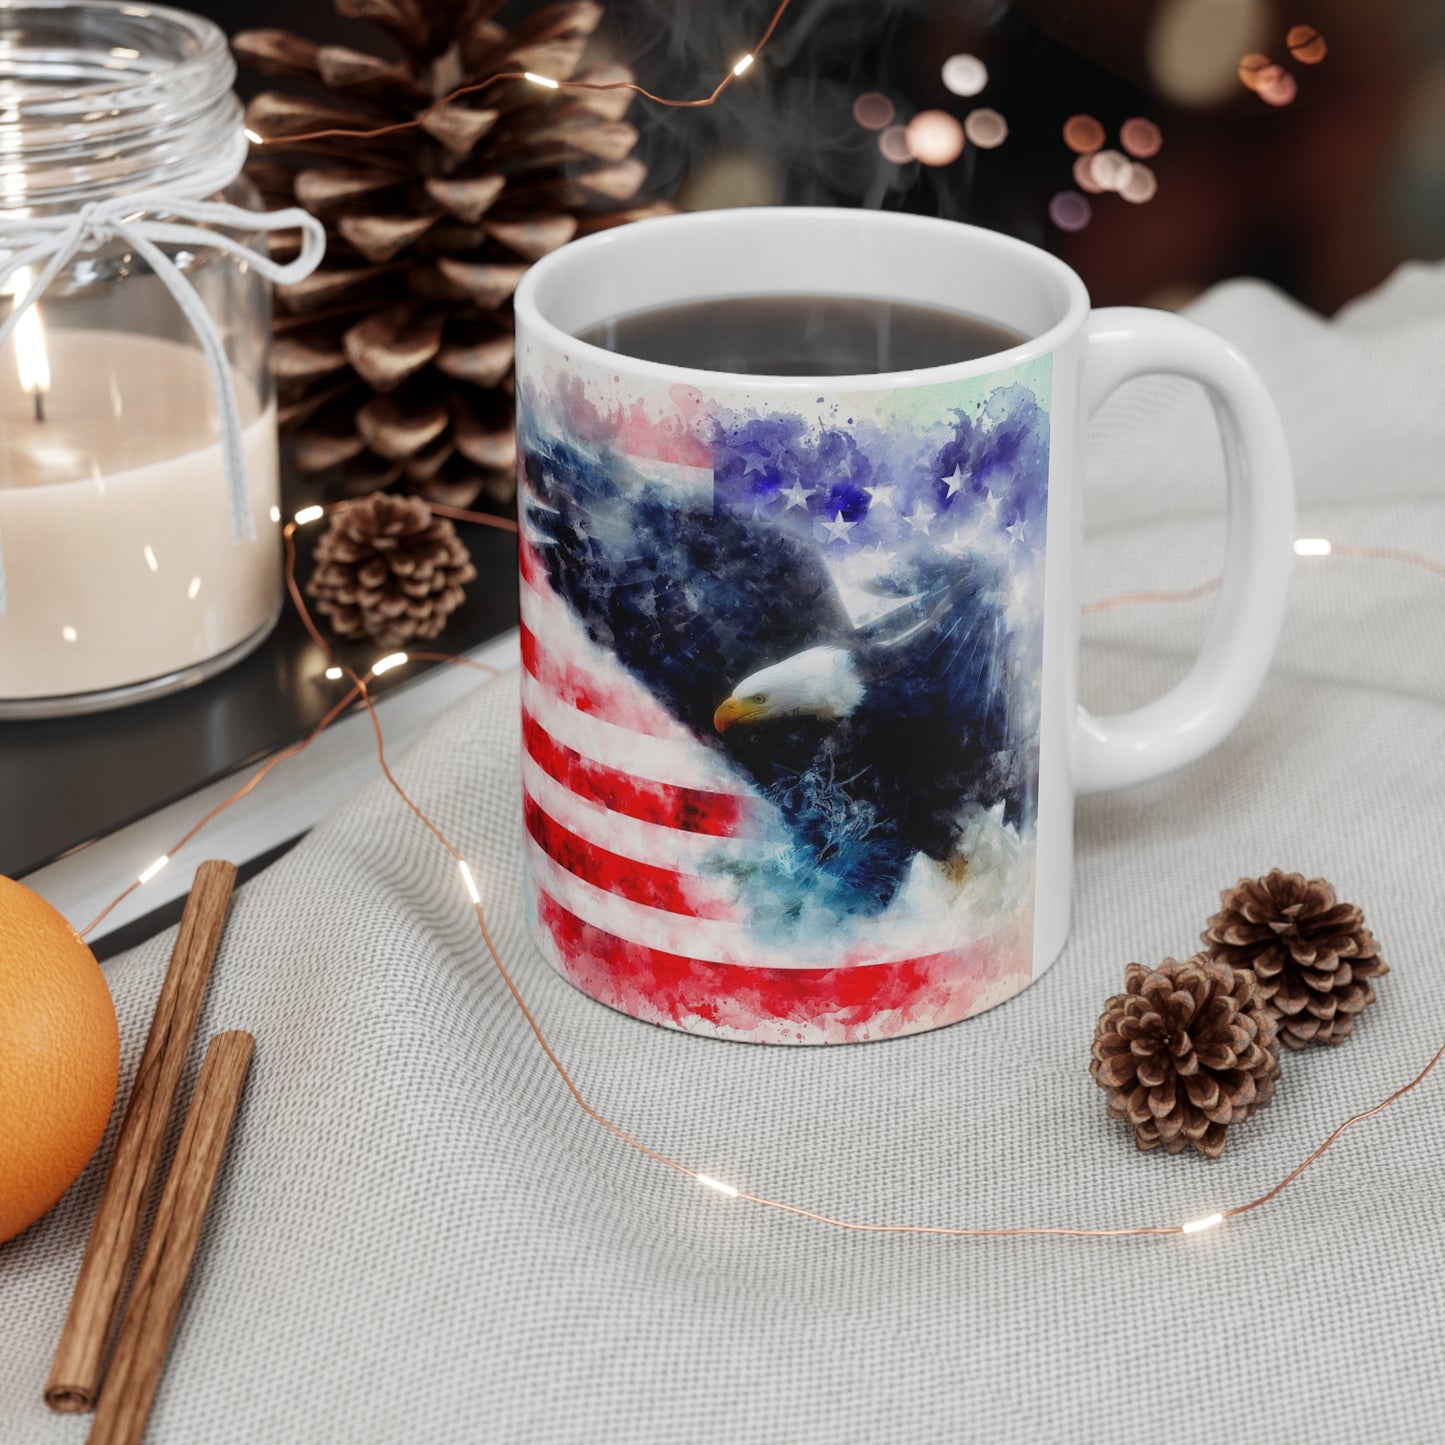 Double Eagle on Flag Coffee Mug